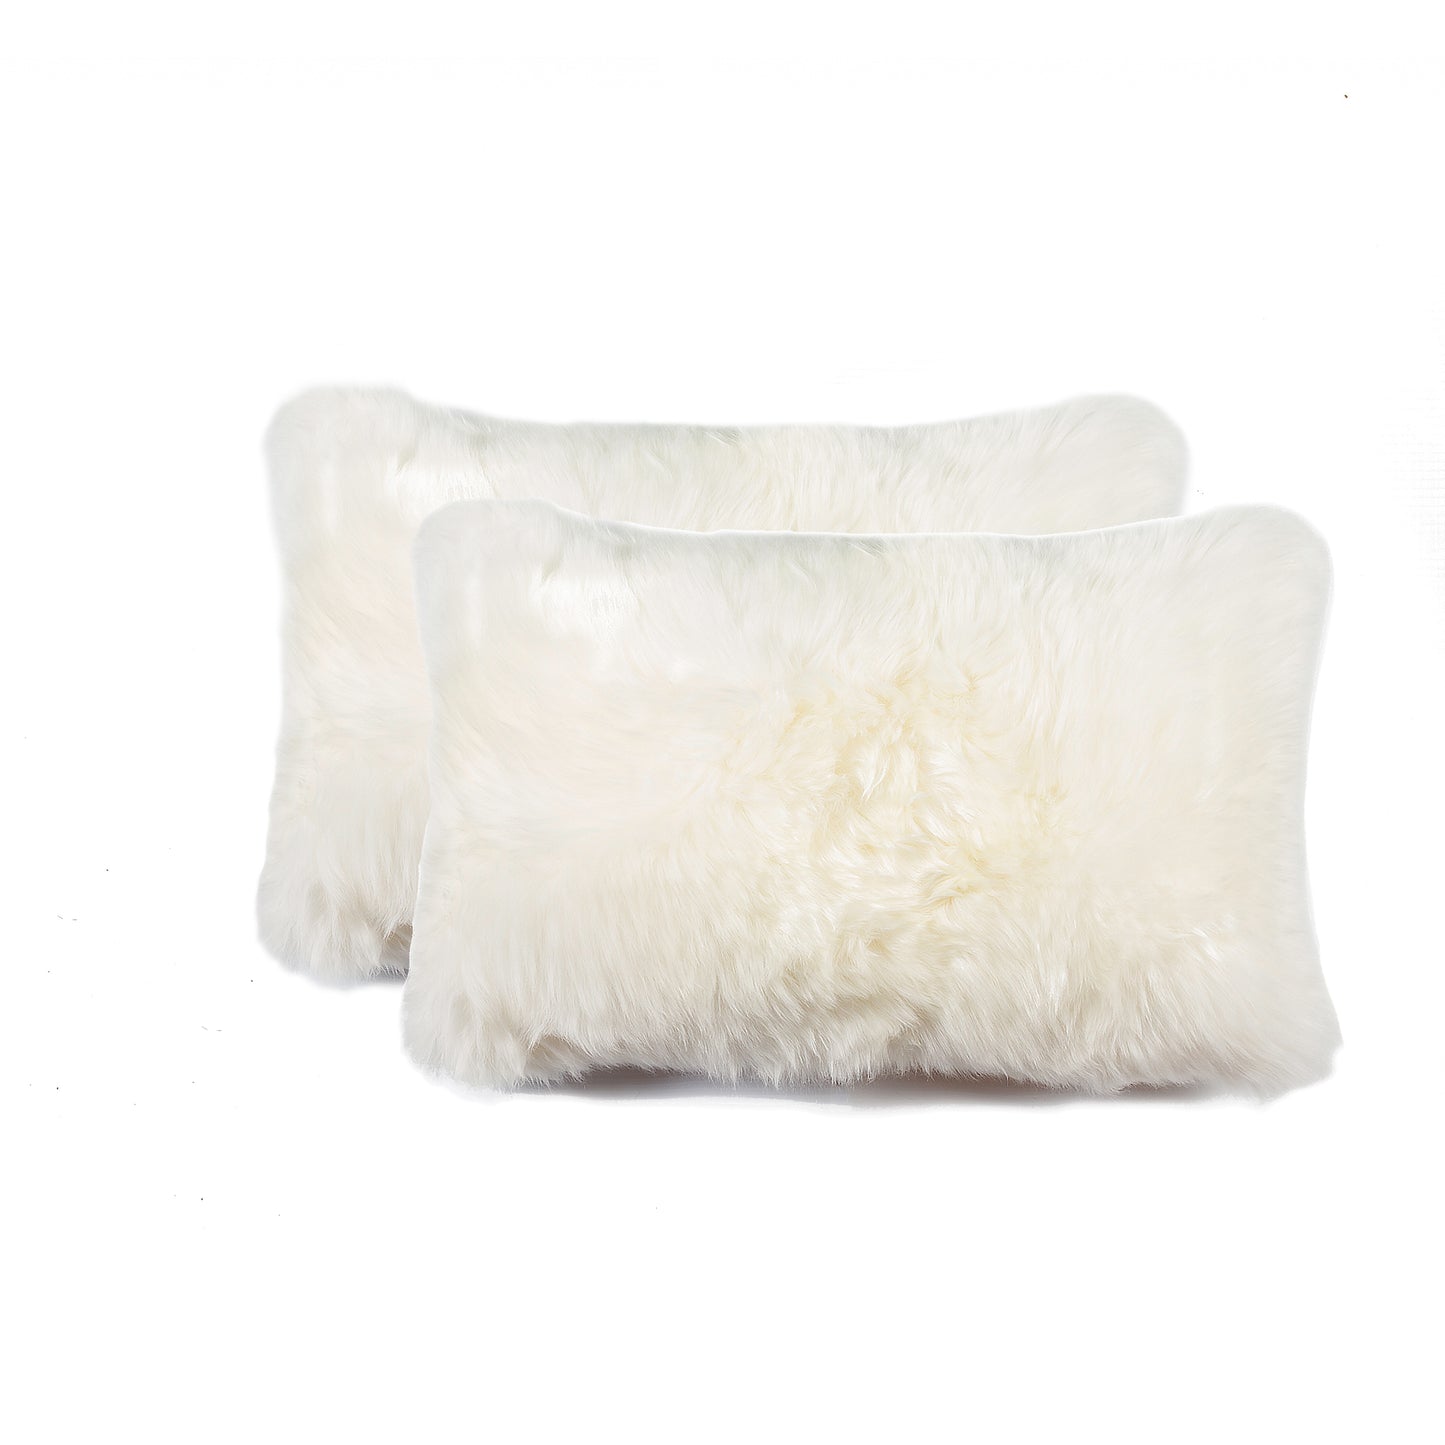 12" x 20" x 5" Natural Sheepskin  Pillow 2pcs-0